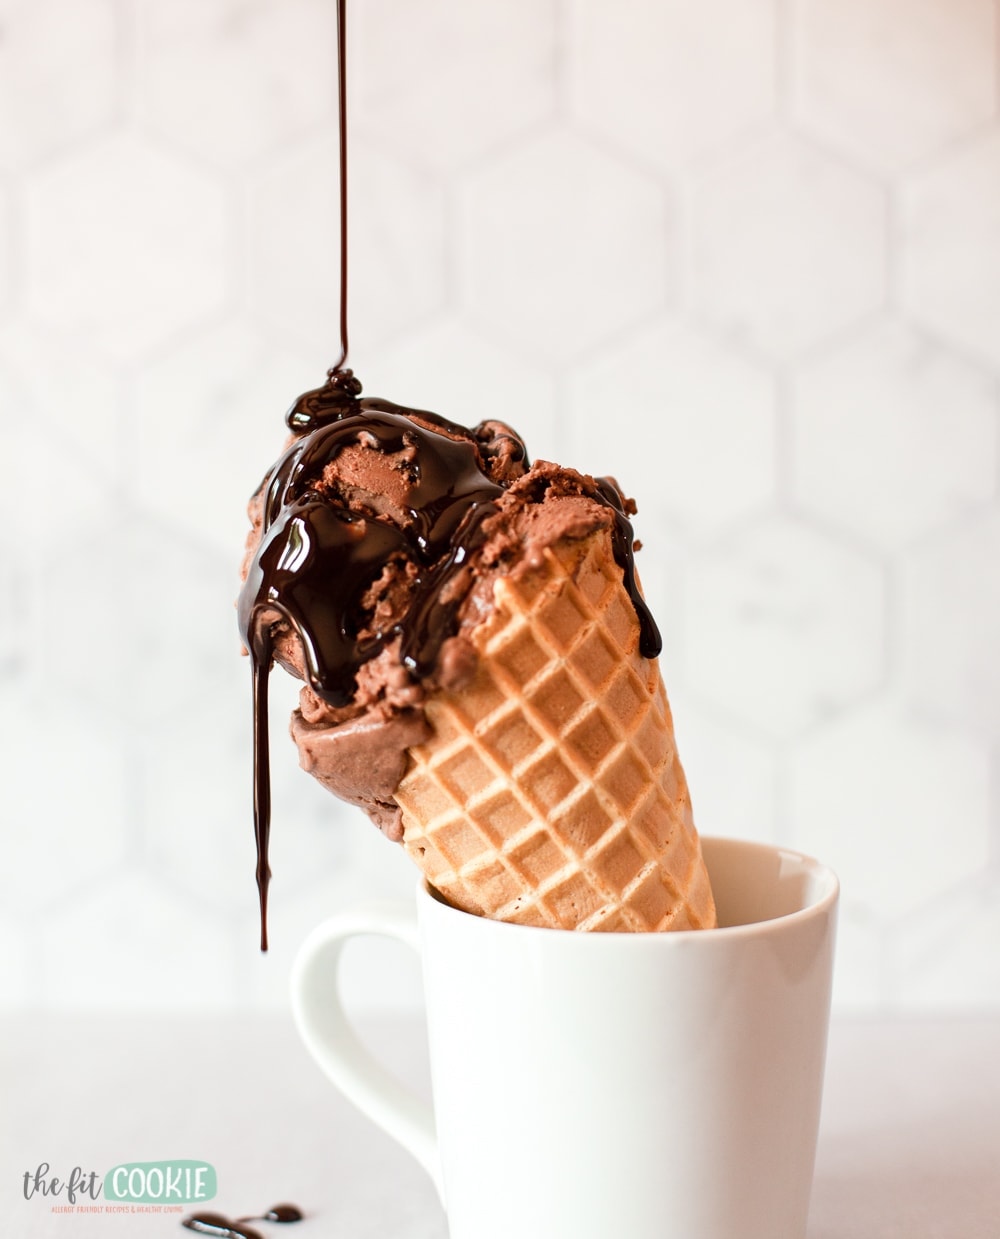 chocolate oreo ice cream on a waffle cone with chocolate sauce